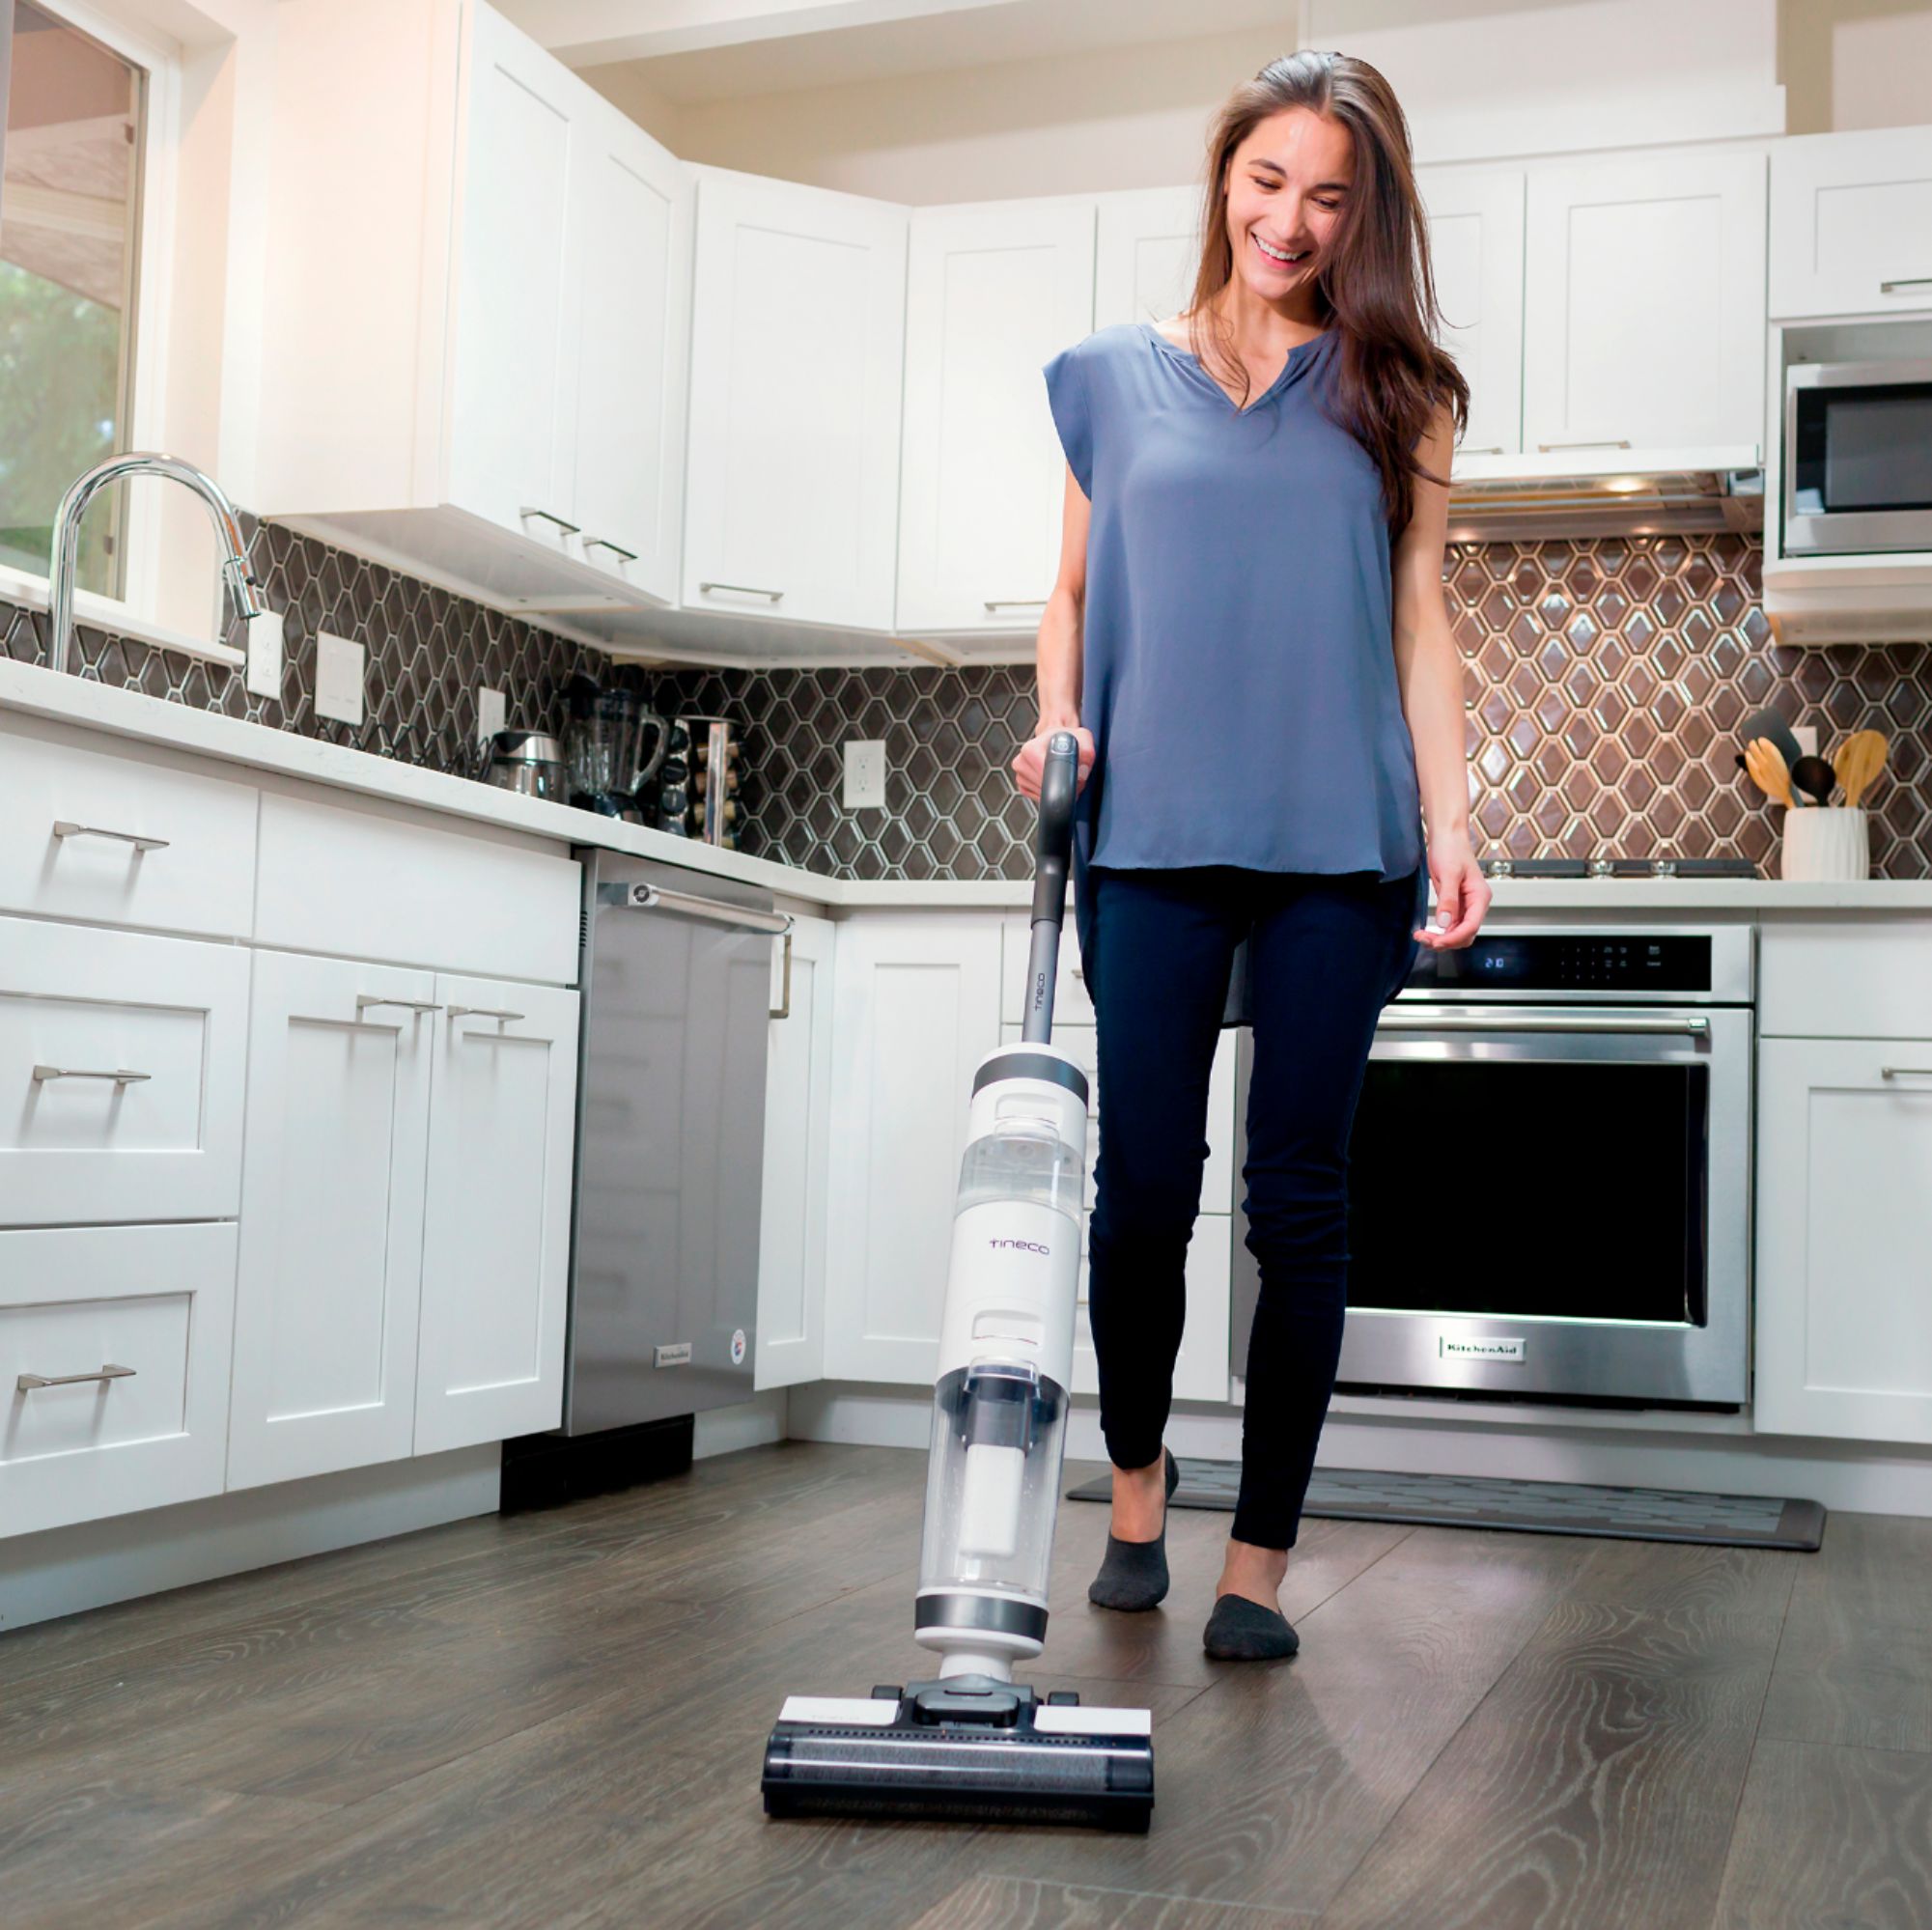  Tineco iFLOOR Cordless Wet Dry Vacuum Cleaner and Mop